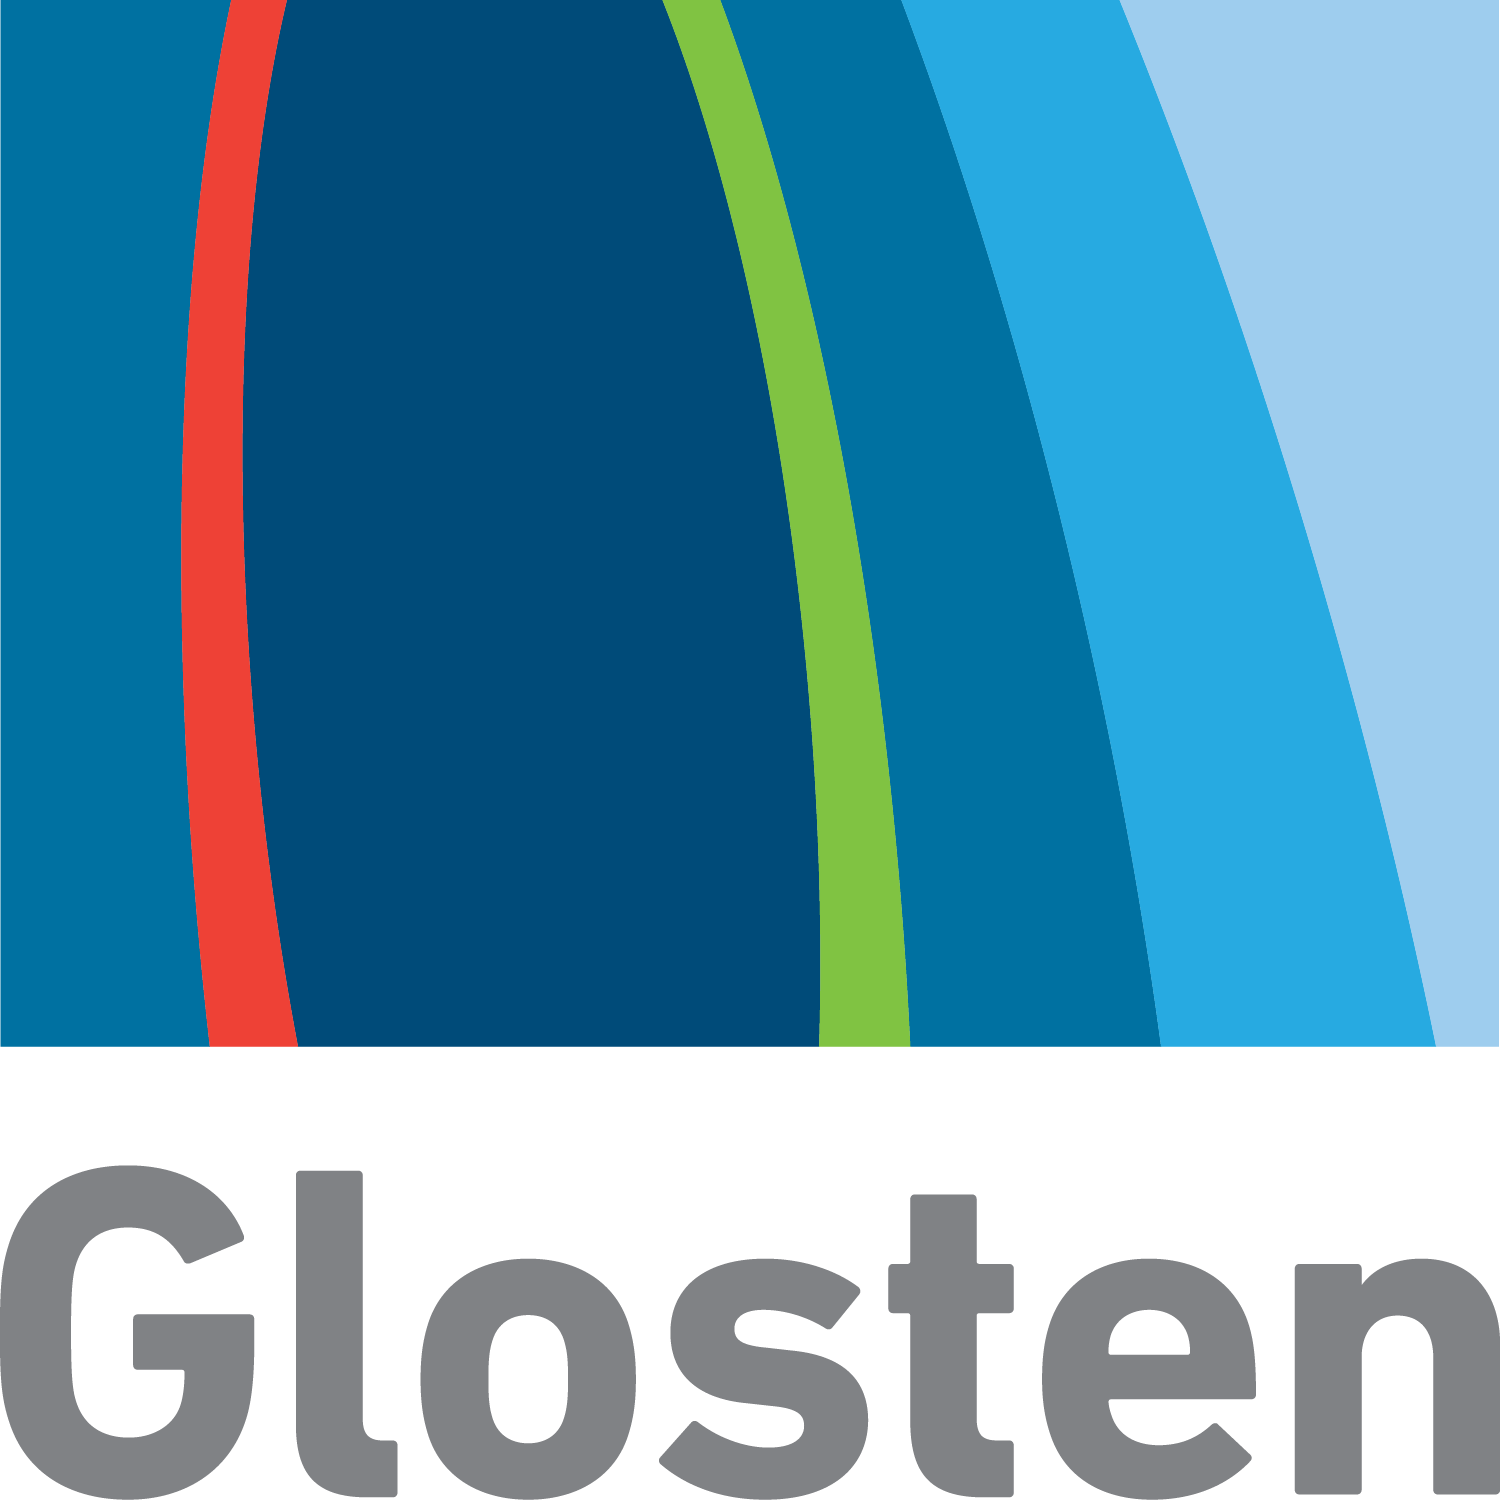 Glosten Logo - Copy.jpg